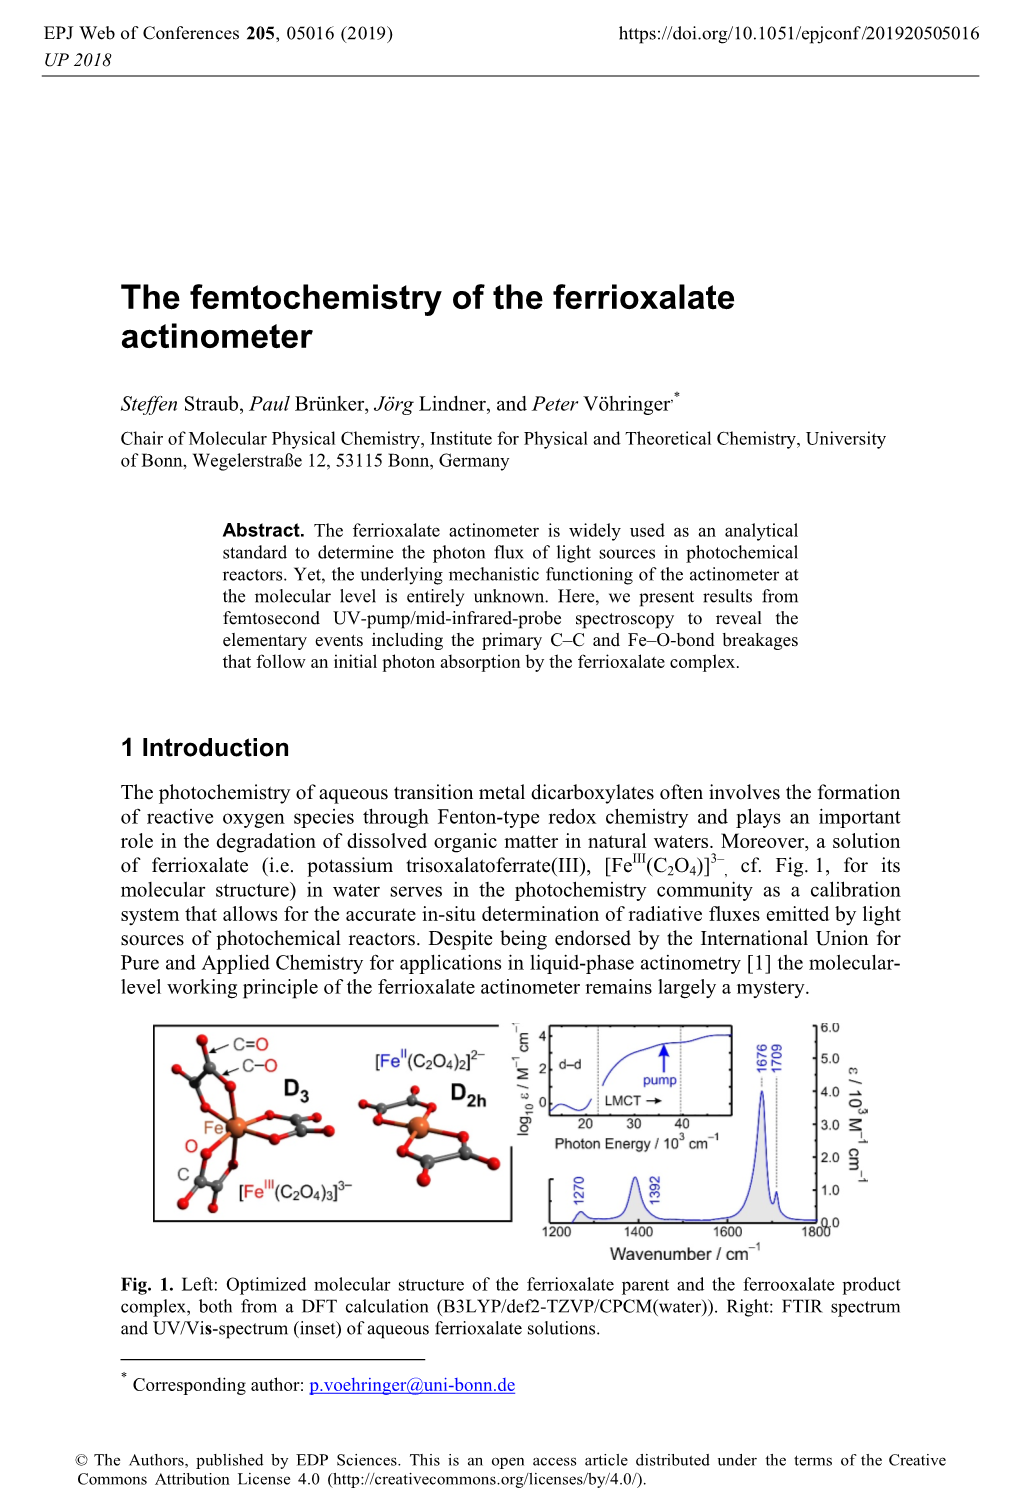 The Femtochemistry of the Ferrioxalate Actinometer